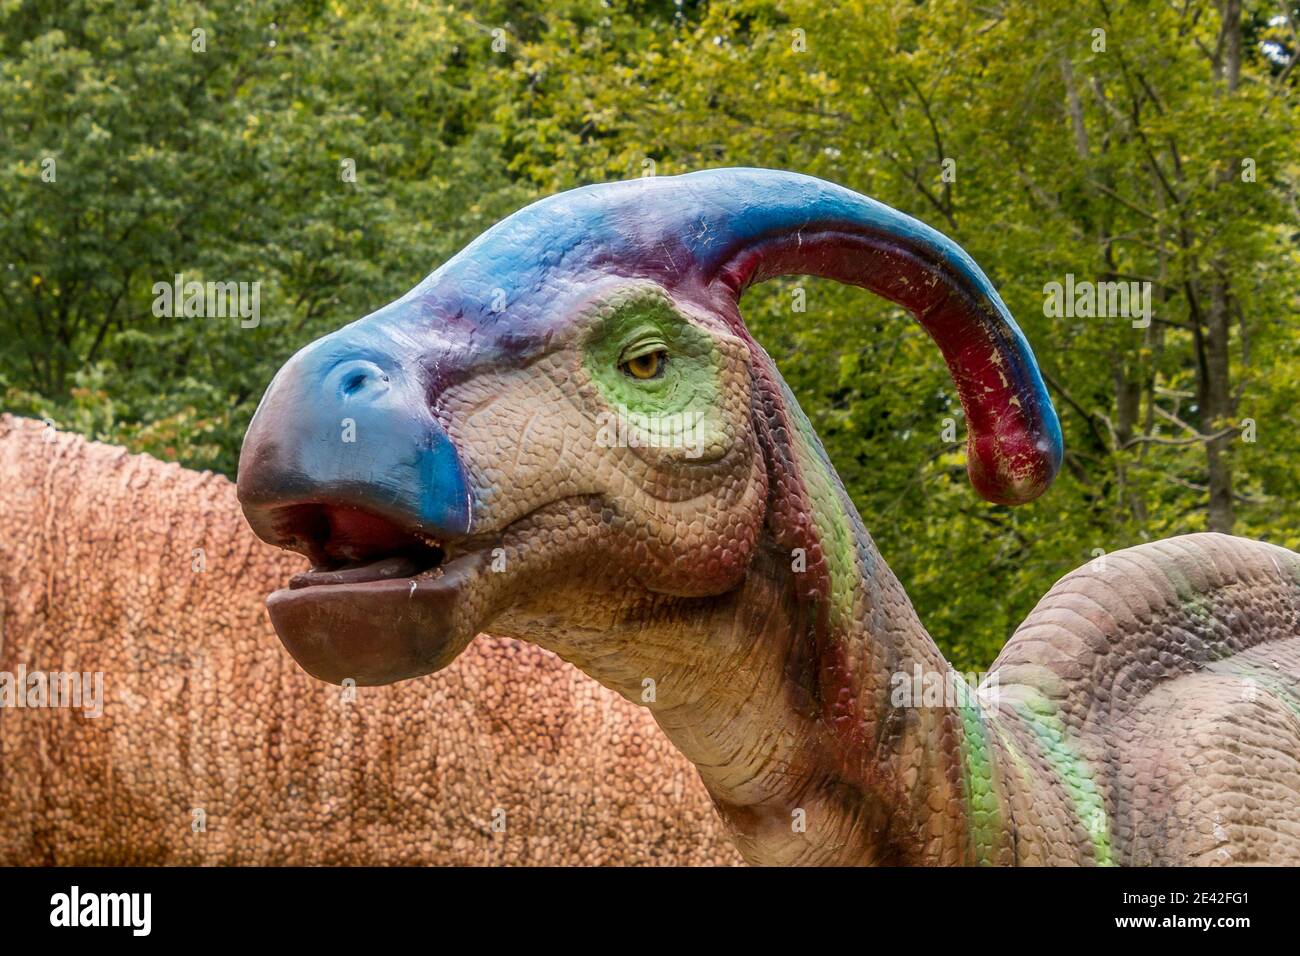 Aalborg, Denmark - 25 Jul 2020: Dinosaur in natural surroundings and in lifelike size, Stock Photo